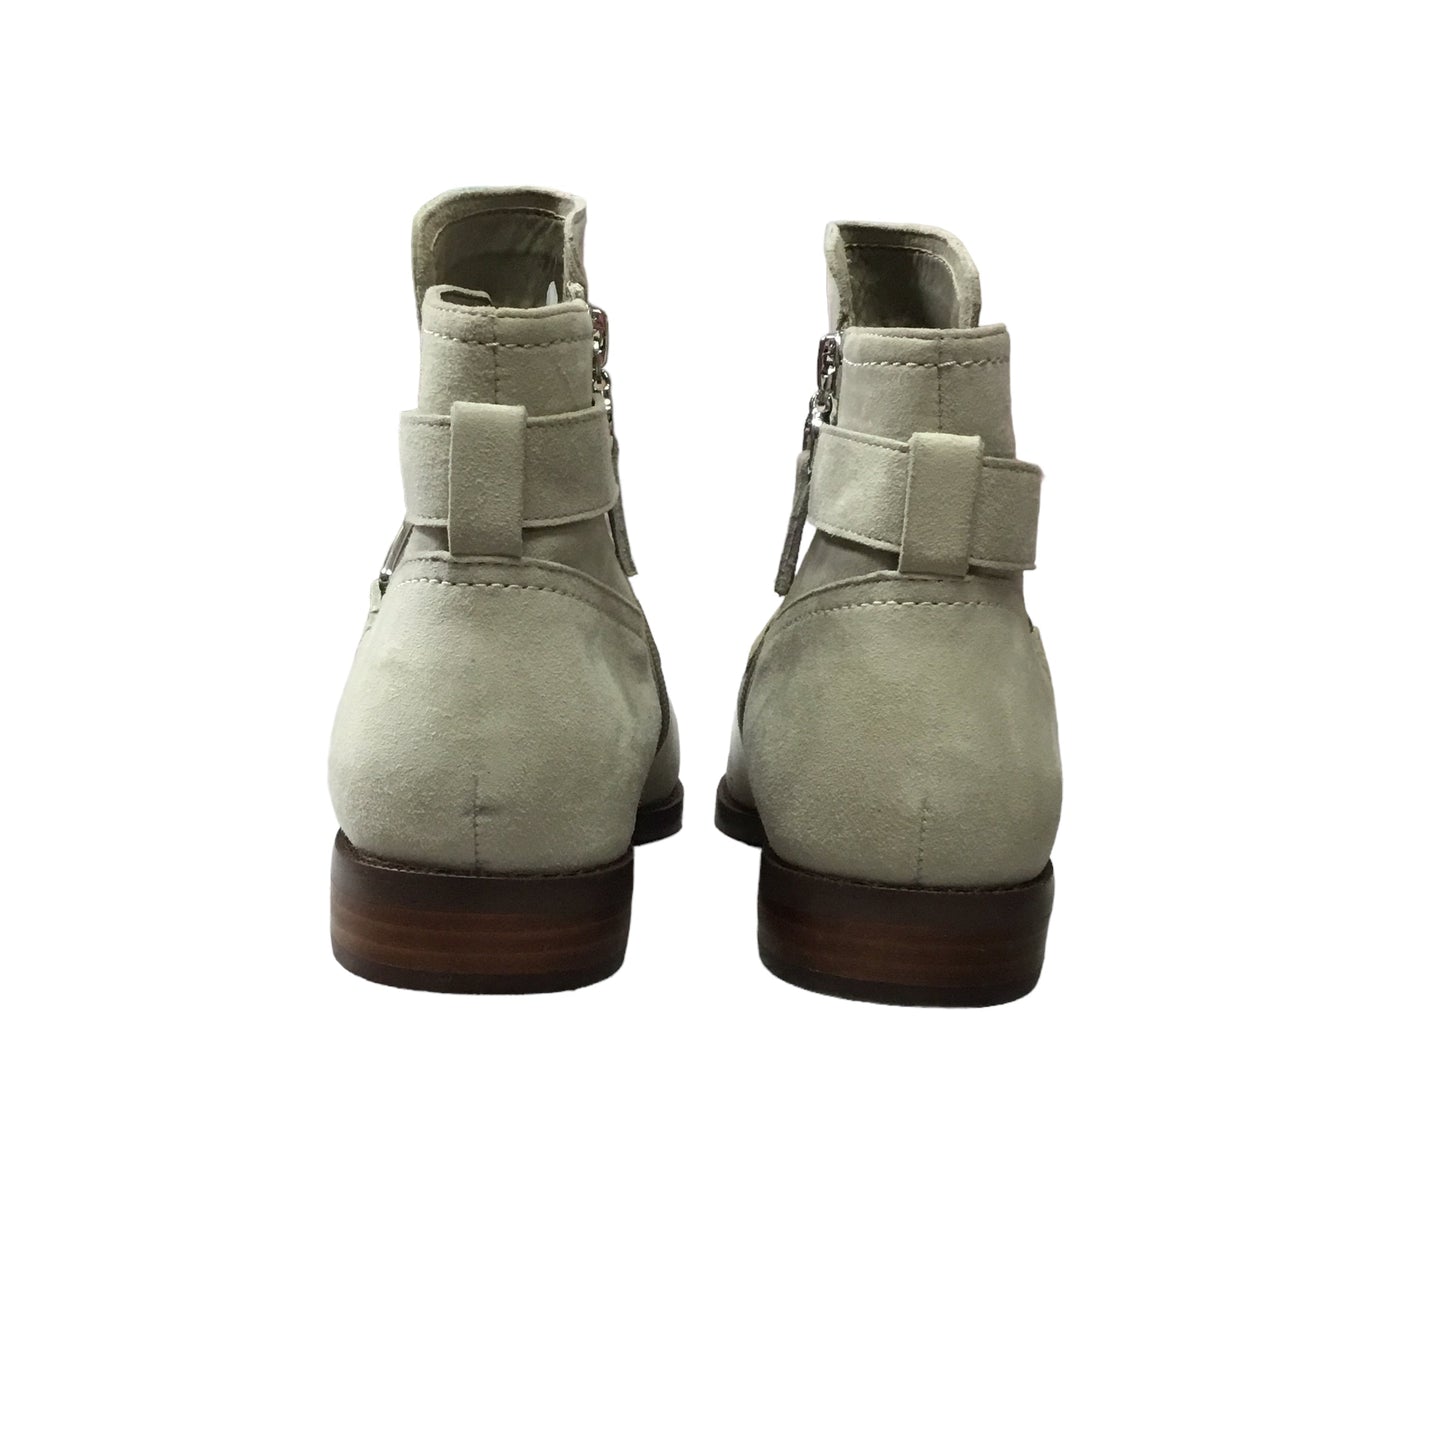 Boots Ankle Heels By Lauren By Ralph Lauren  Size: 6.5